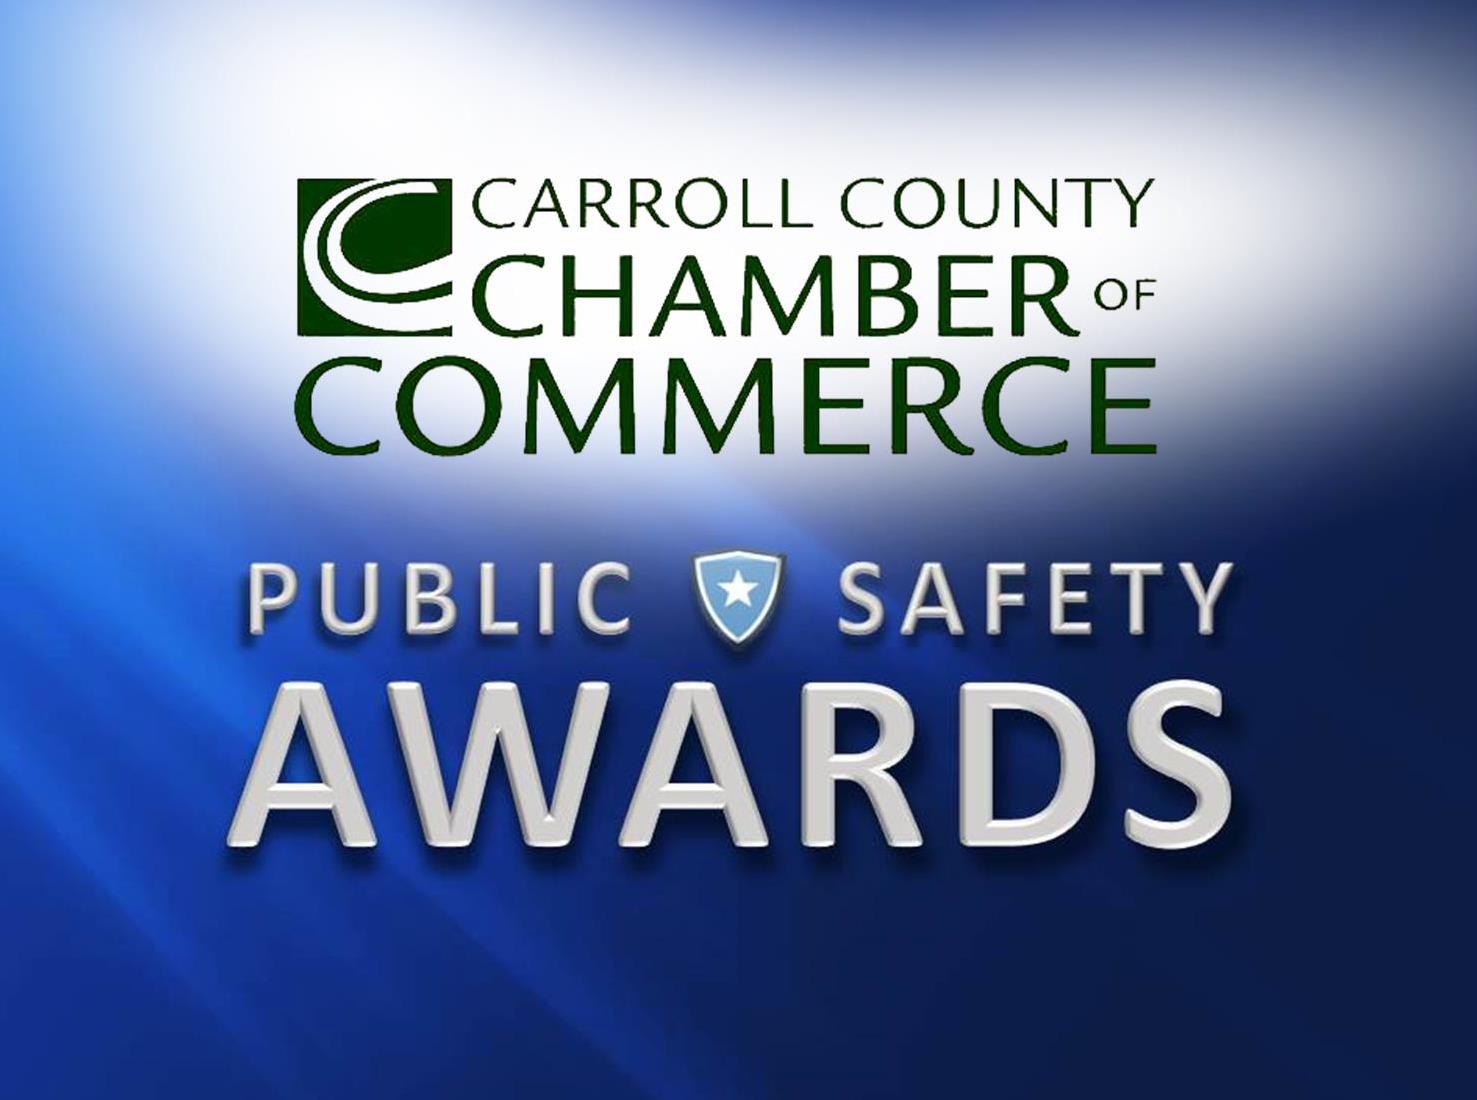 Safety Awards logo